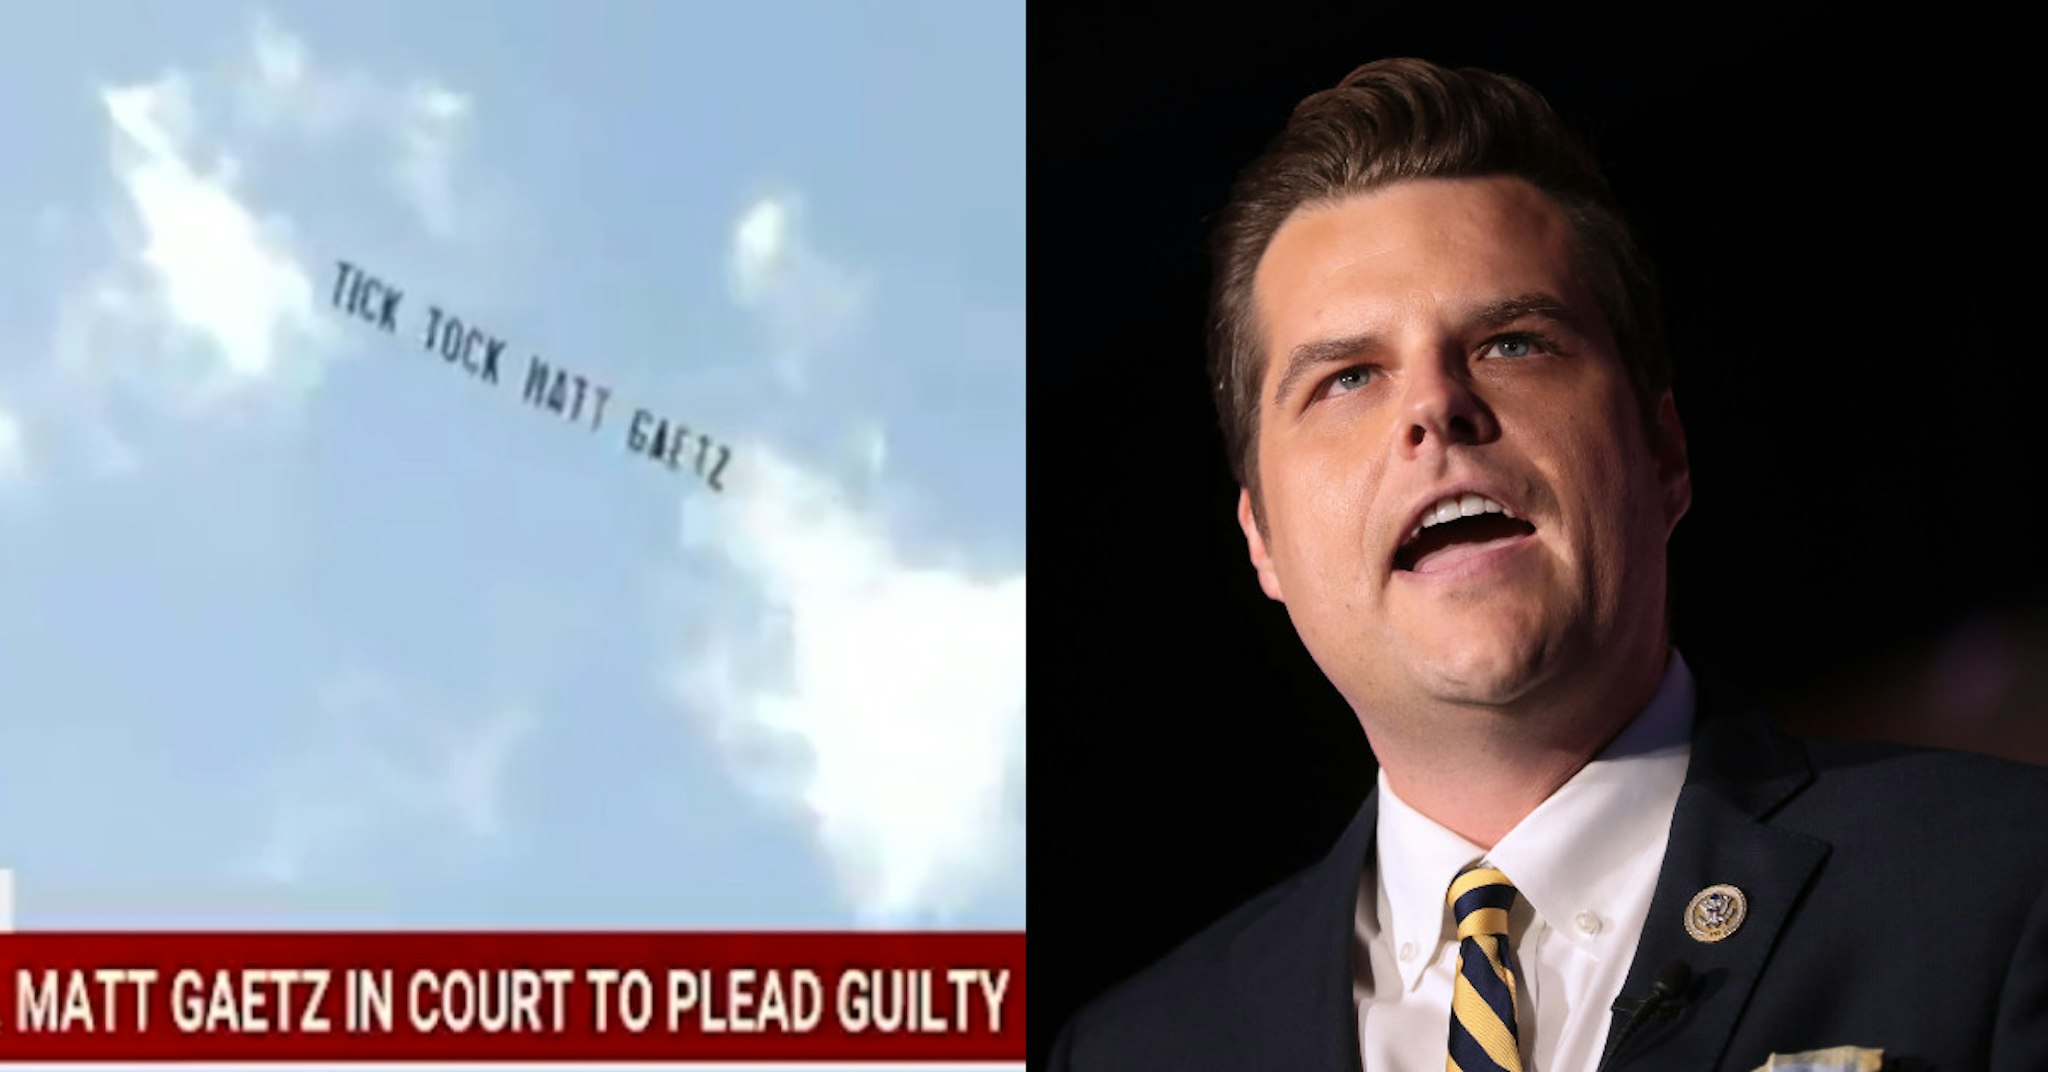 Tick Tock Matt Gaetz Banner Flies Over Orlando After His Wingman Pleads Guilty To Sex Charges